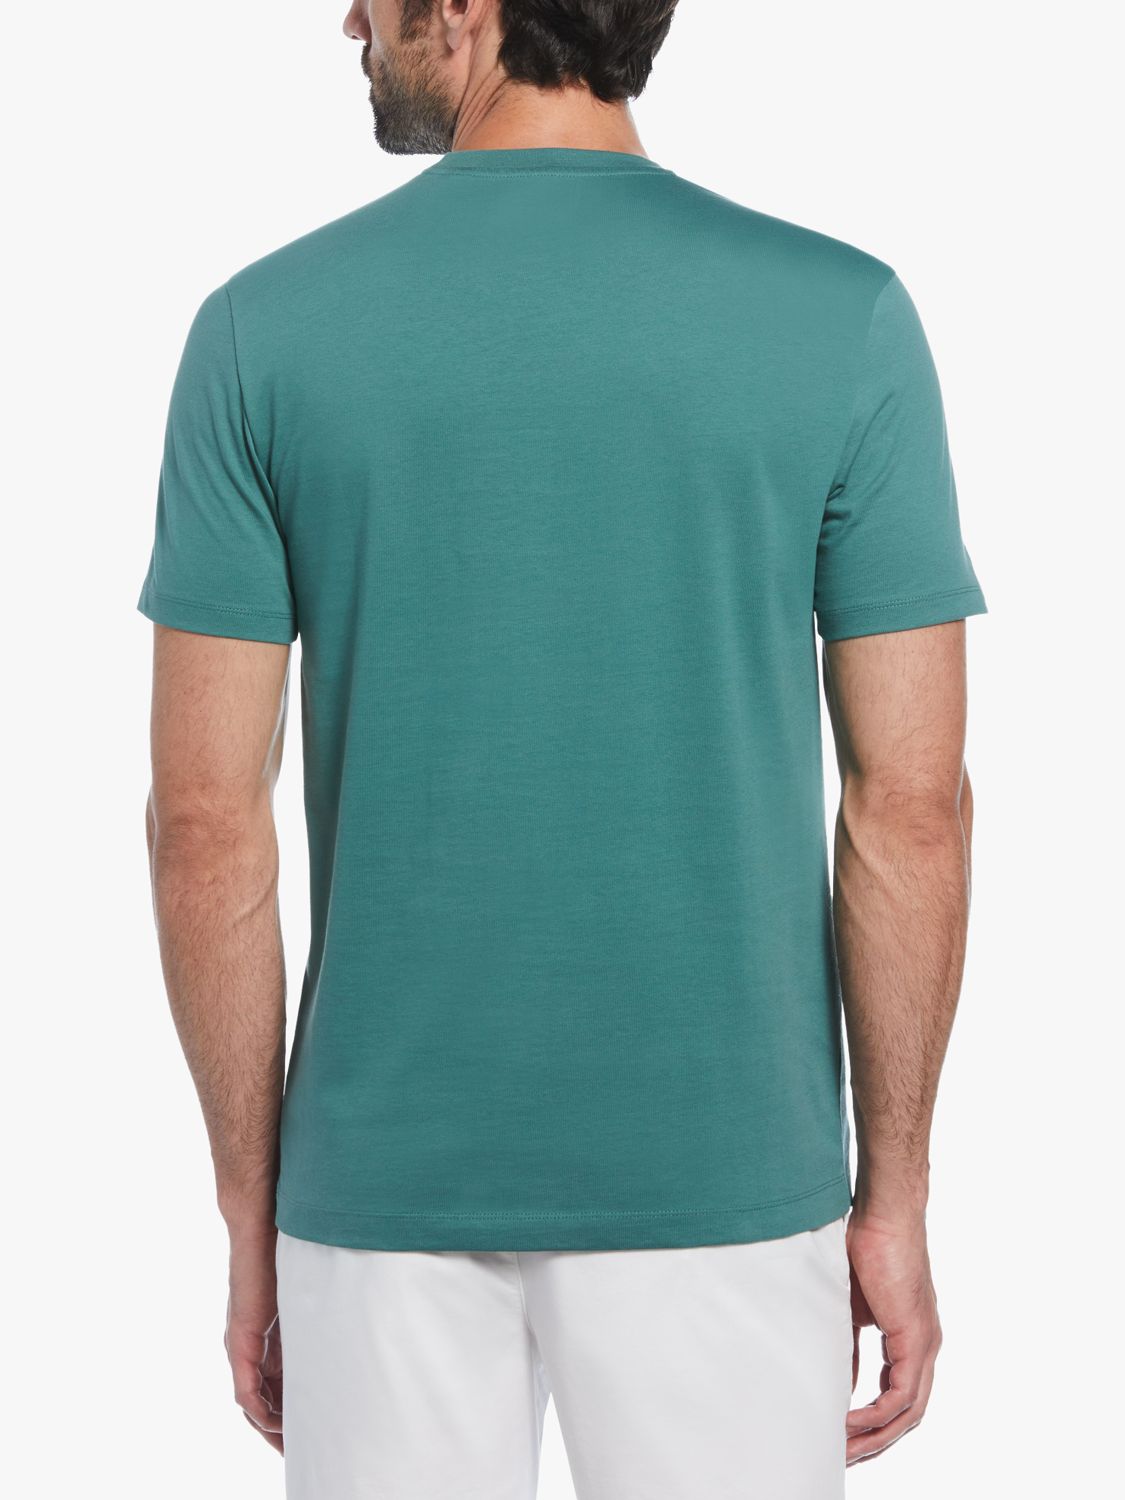 Original Penguin Short Sleeve Embroidered Logo T-Shirt, Green, S